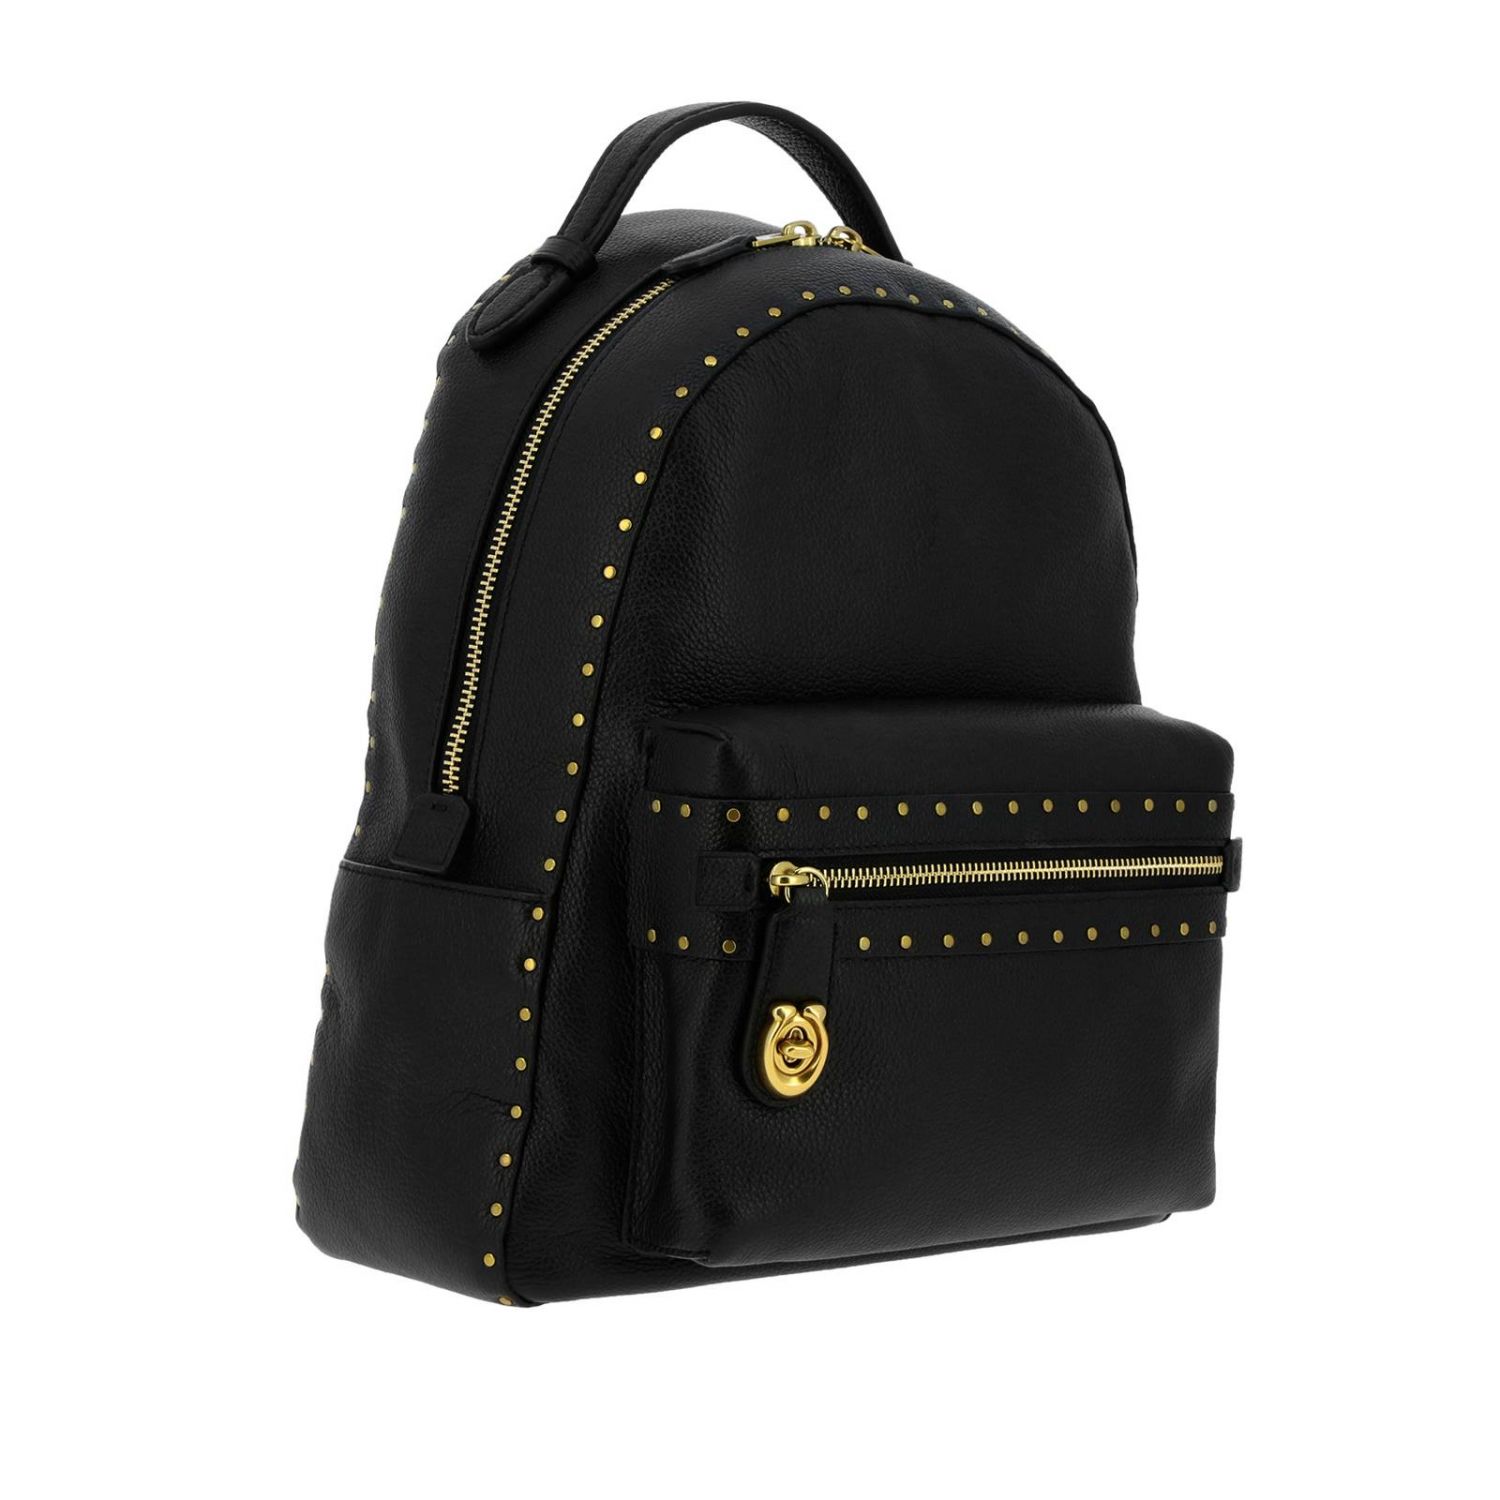 Coach Outlet: Backpack women | Backpack Coach Women Black | Backpack